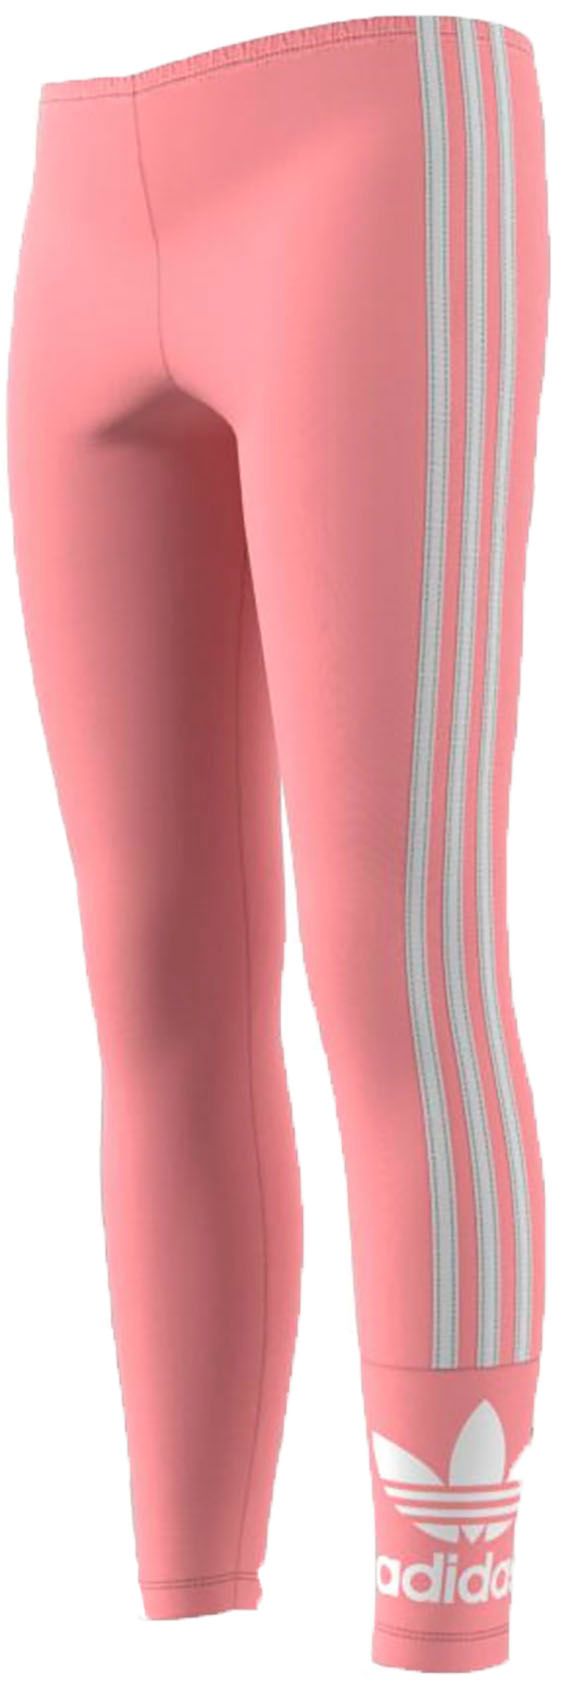 adidas Originals Girls' 3-Stripe Icon 